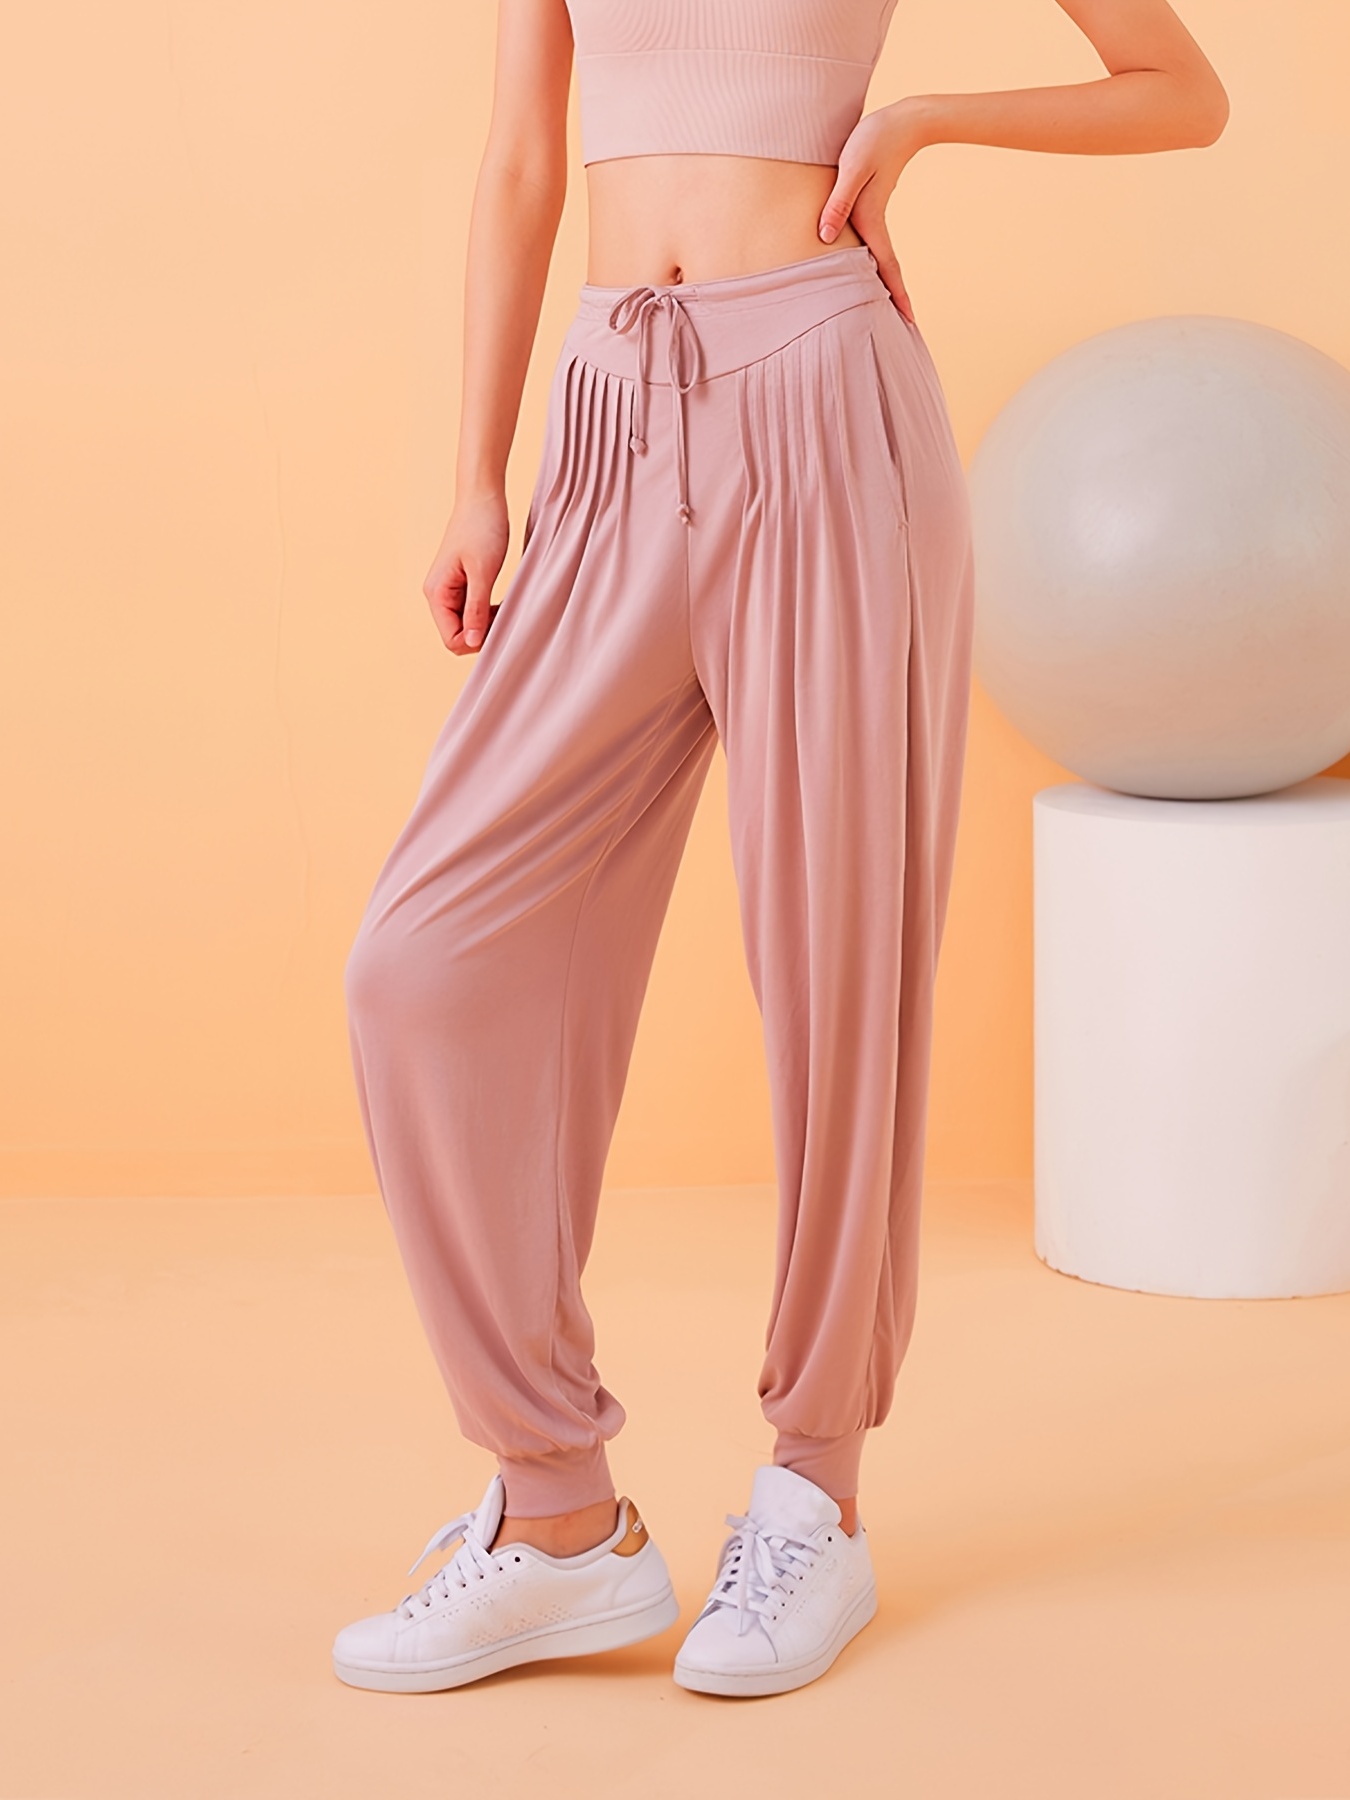 Hanas Pants Women's Casual Fashion Drawstring Elastic Waist Sweatpants  Solid Color Jogging Jogger Pants With Pockets